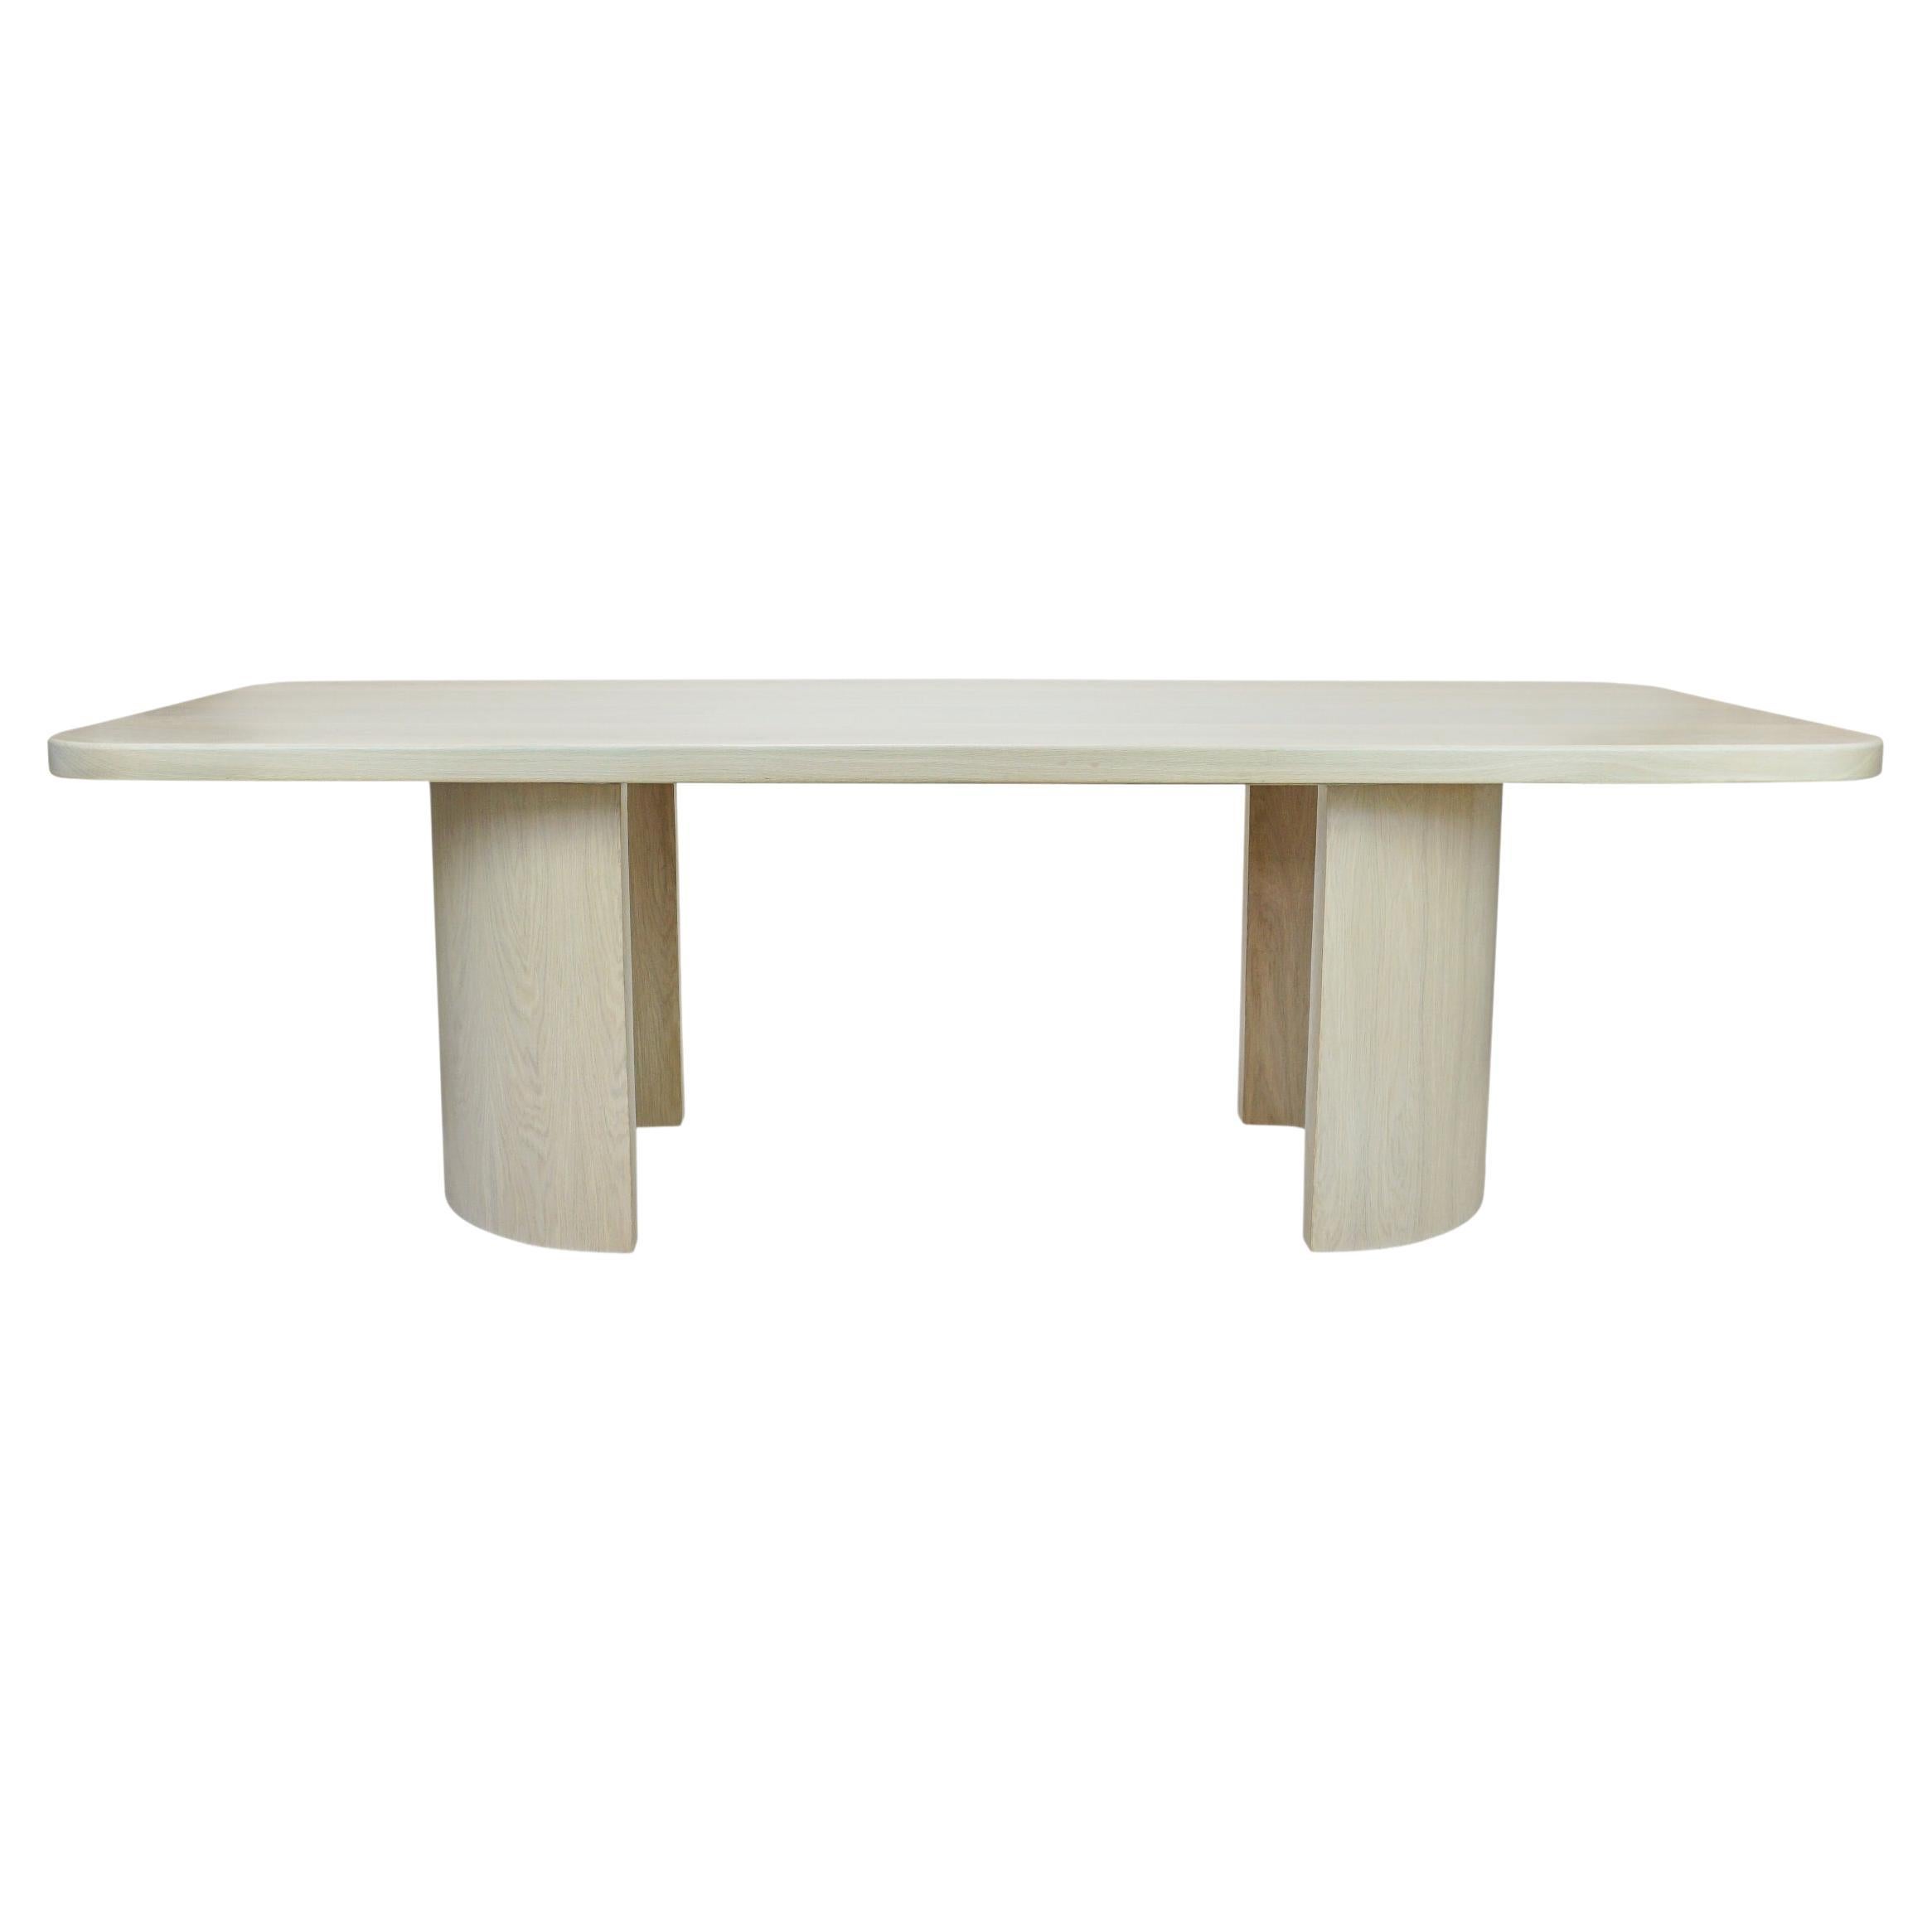 Modern Rectangular White Oak Dining Table W/ Half Cylinder Legs + Round Corners For Sale